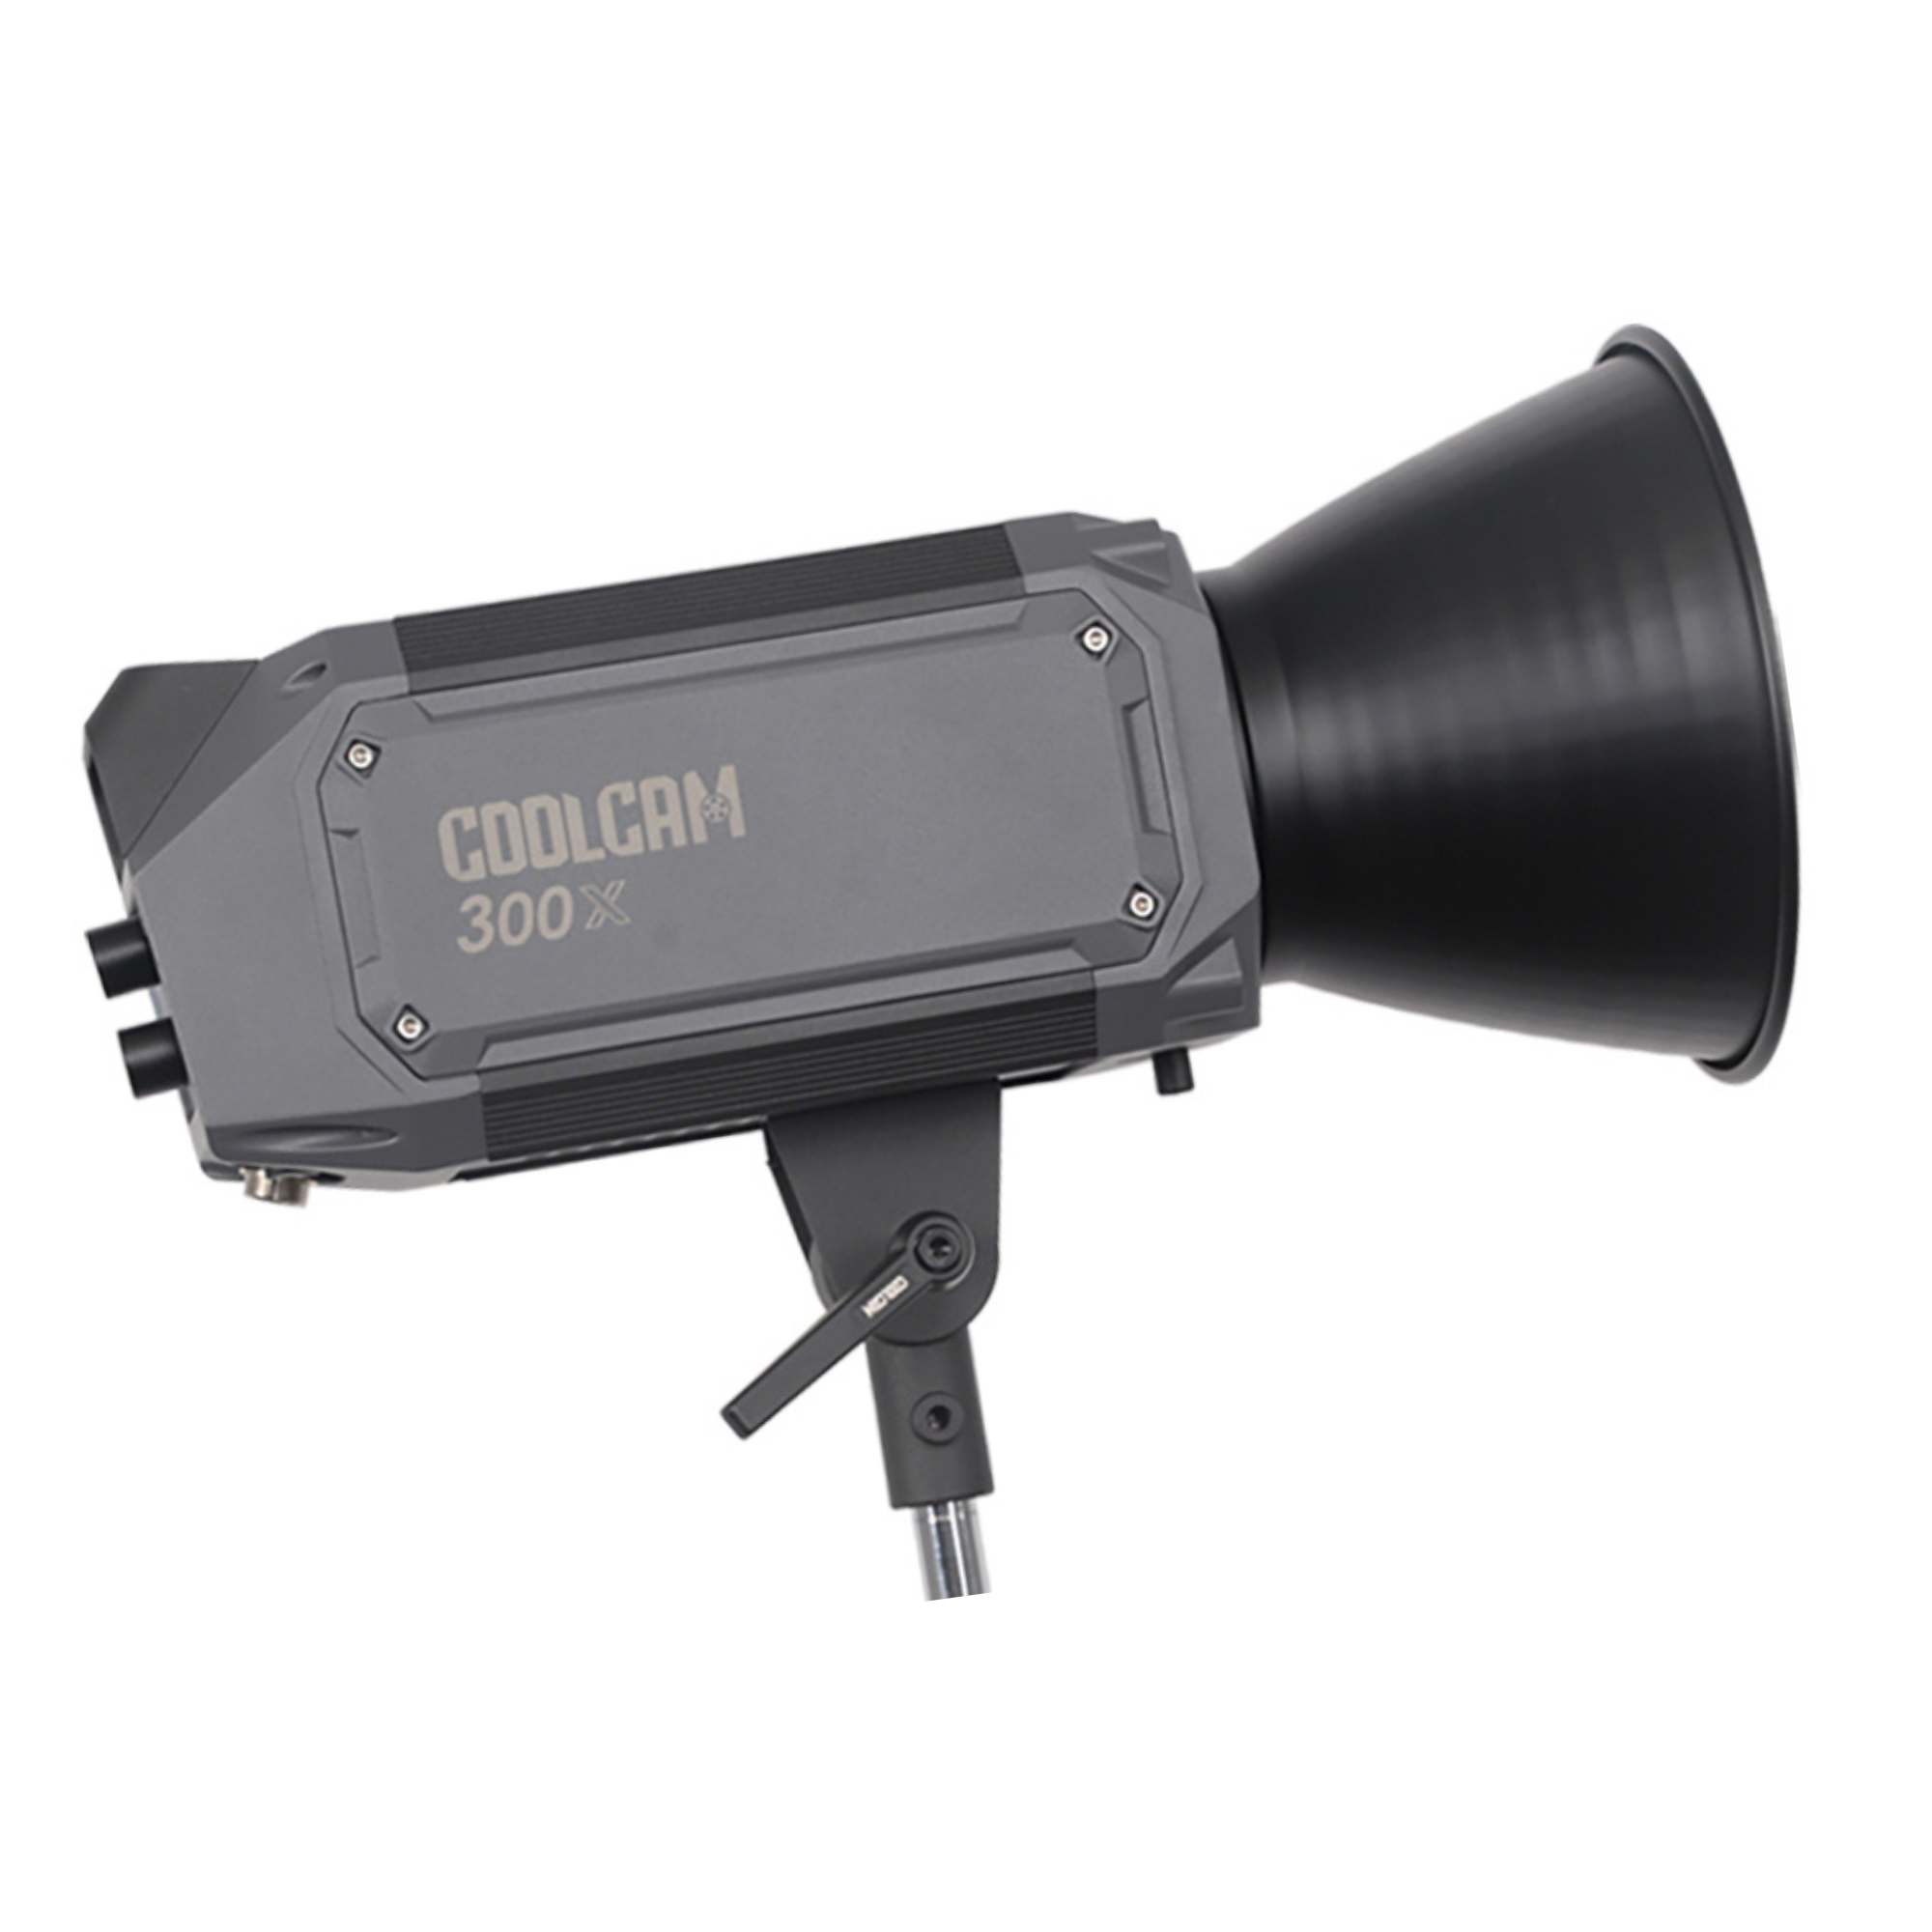 LS Coolcam 300X Bi-color Professional monolight style fill light High brightness